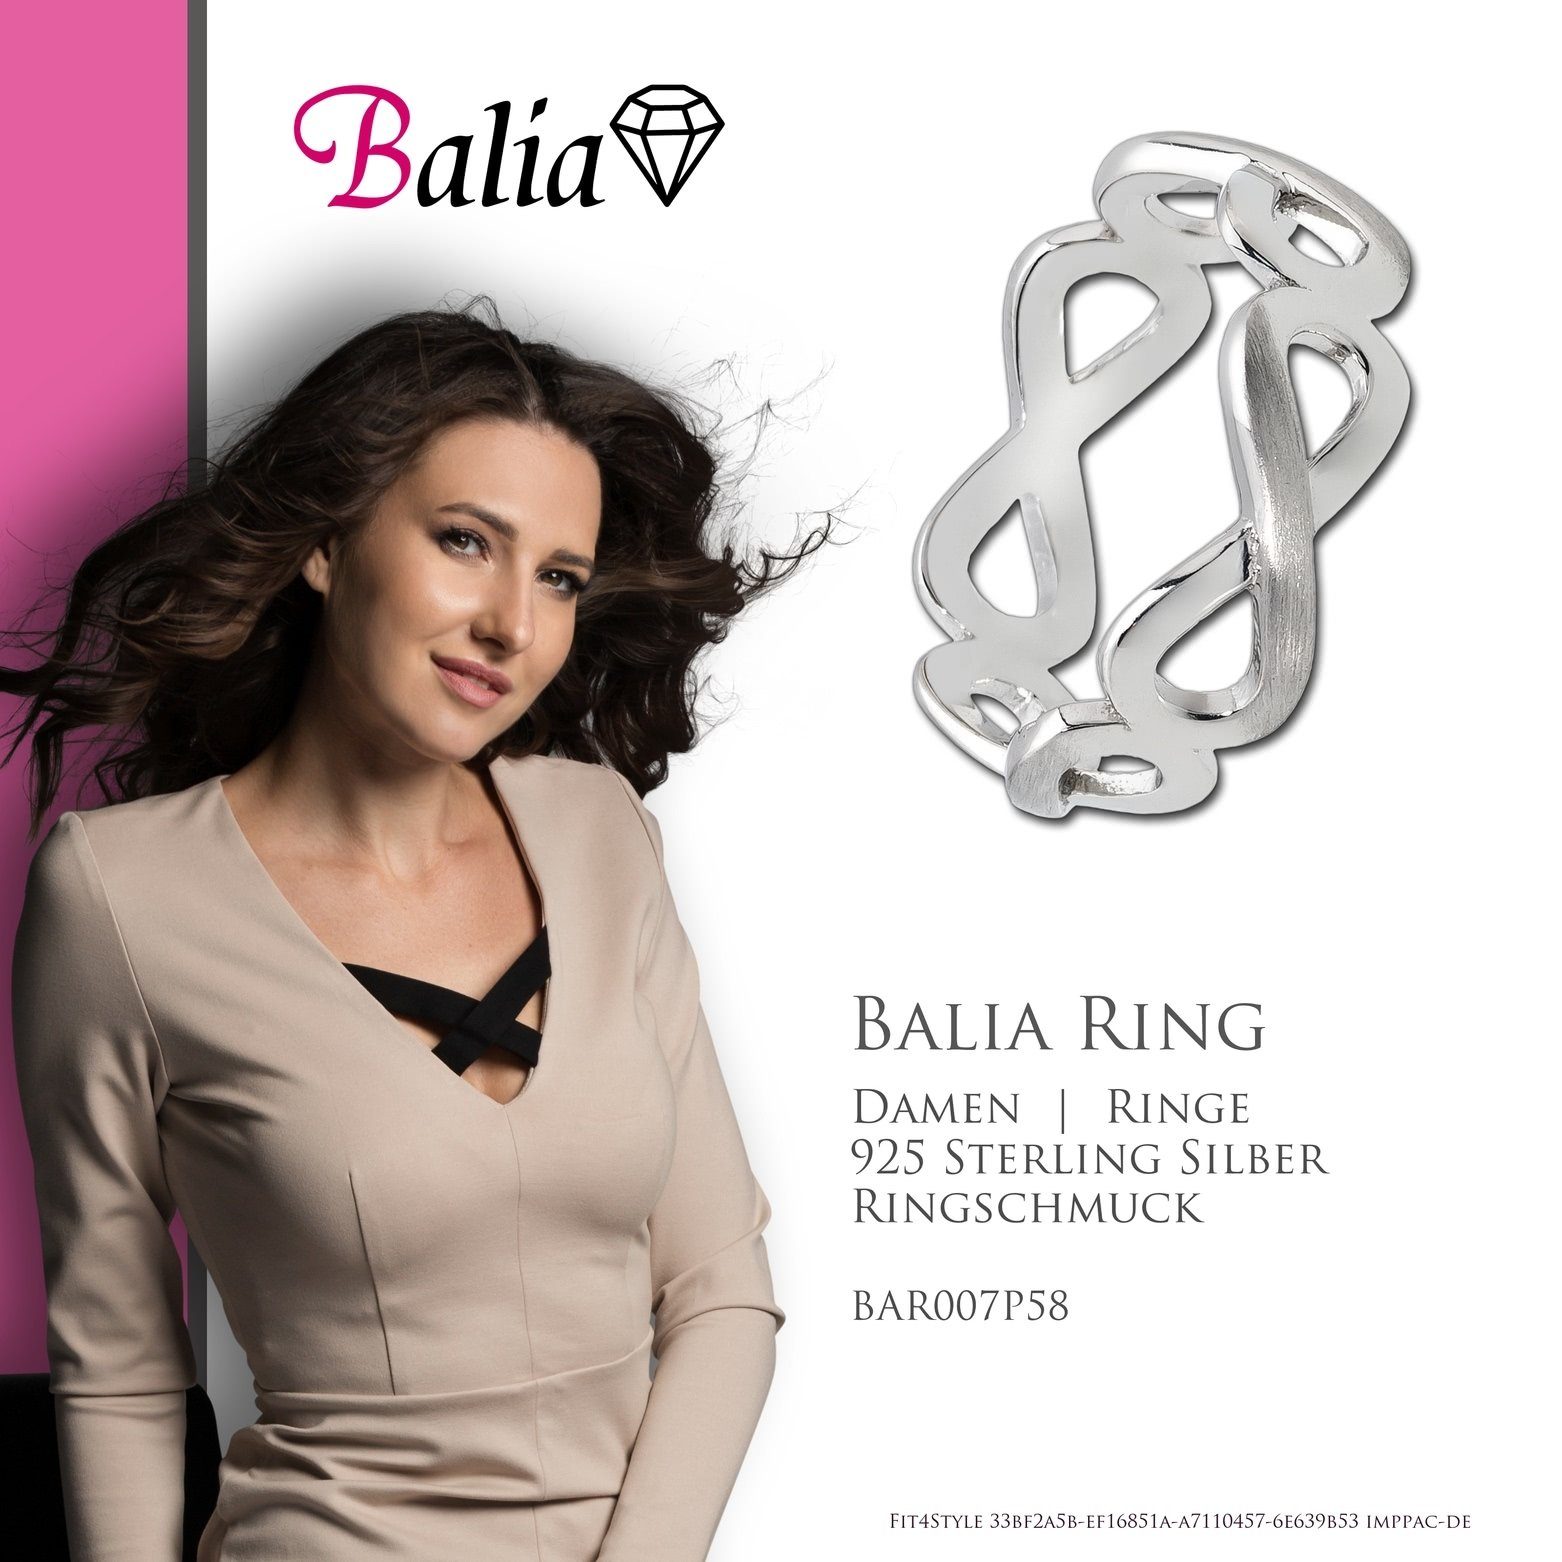 für 925 Ring Damen (Fingerring), Balia 925 58 Silber Ring Silber (18,5), Sterling Silberring Damen Unendlichkeit, Balia